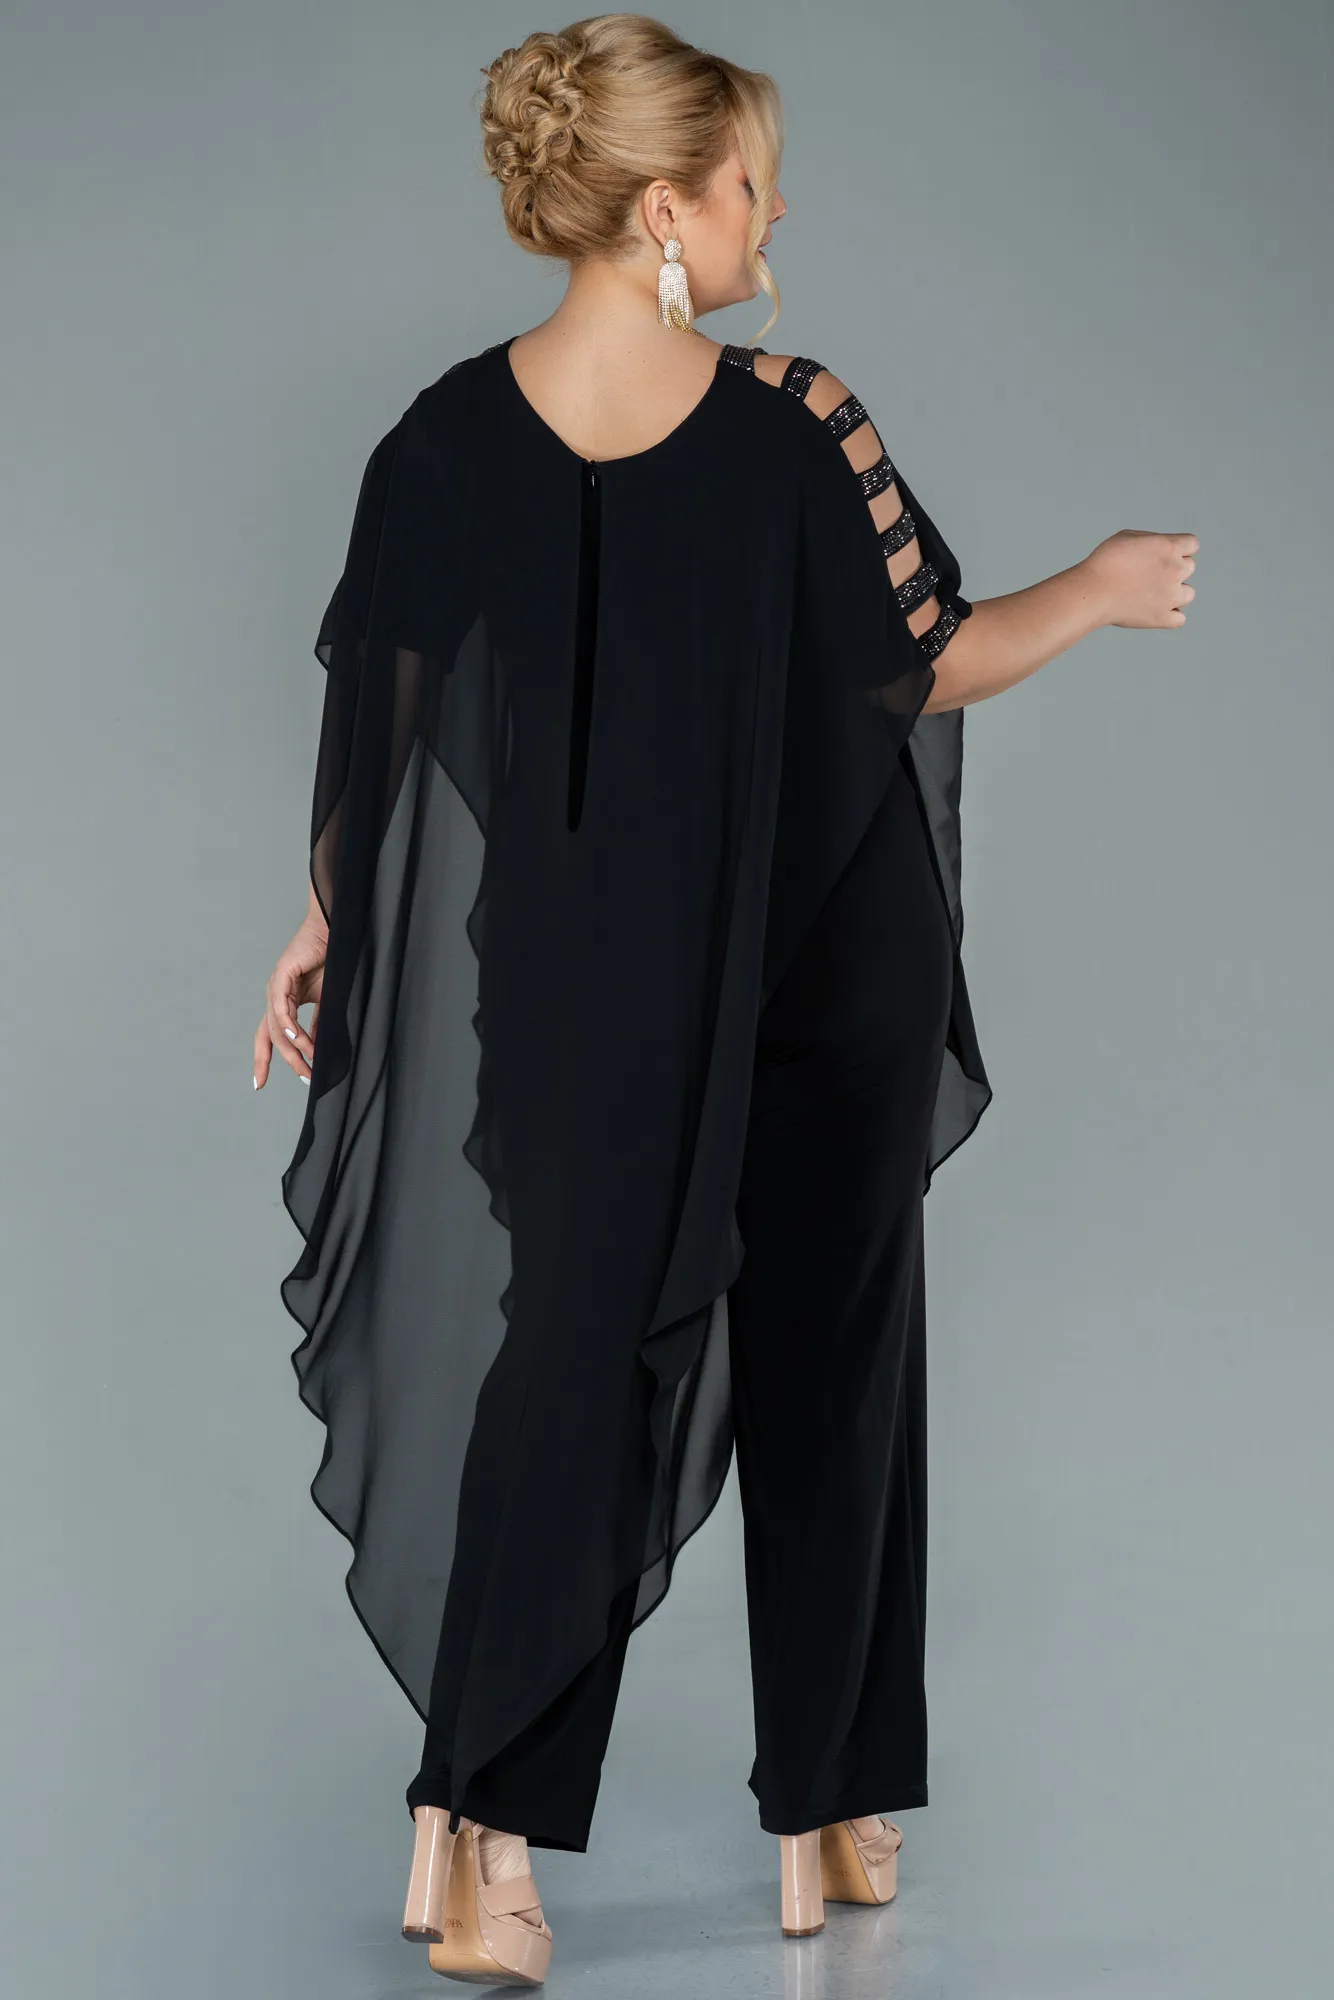 Black-Chiffon Plus Size Evening Dress ABT080